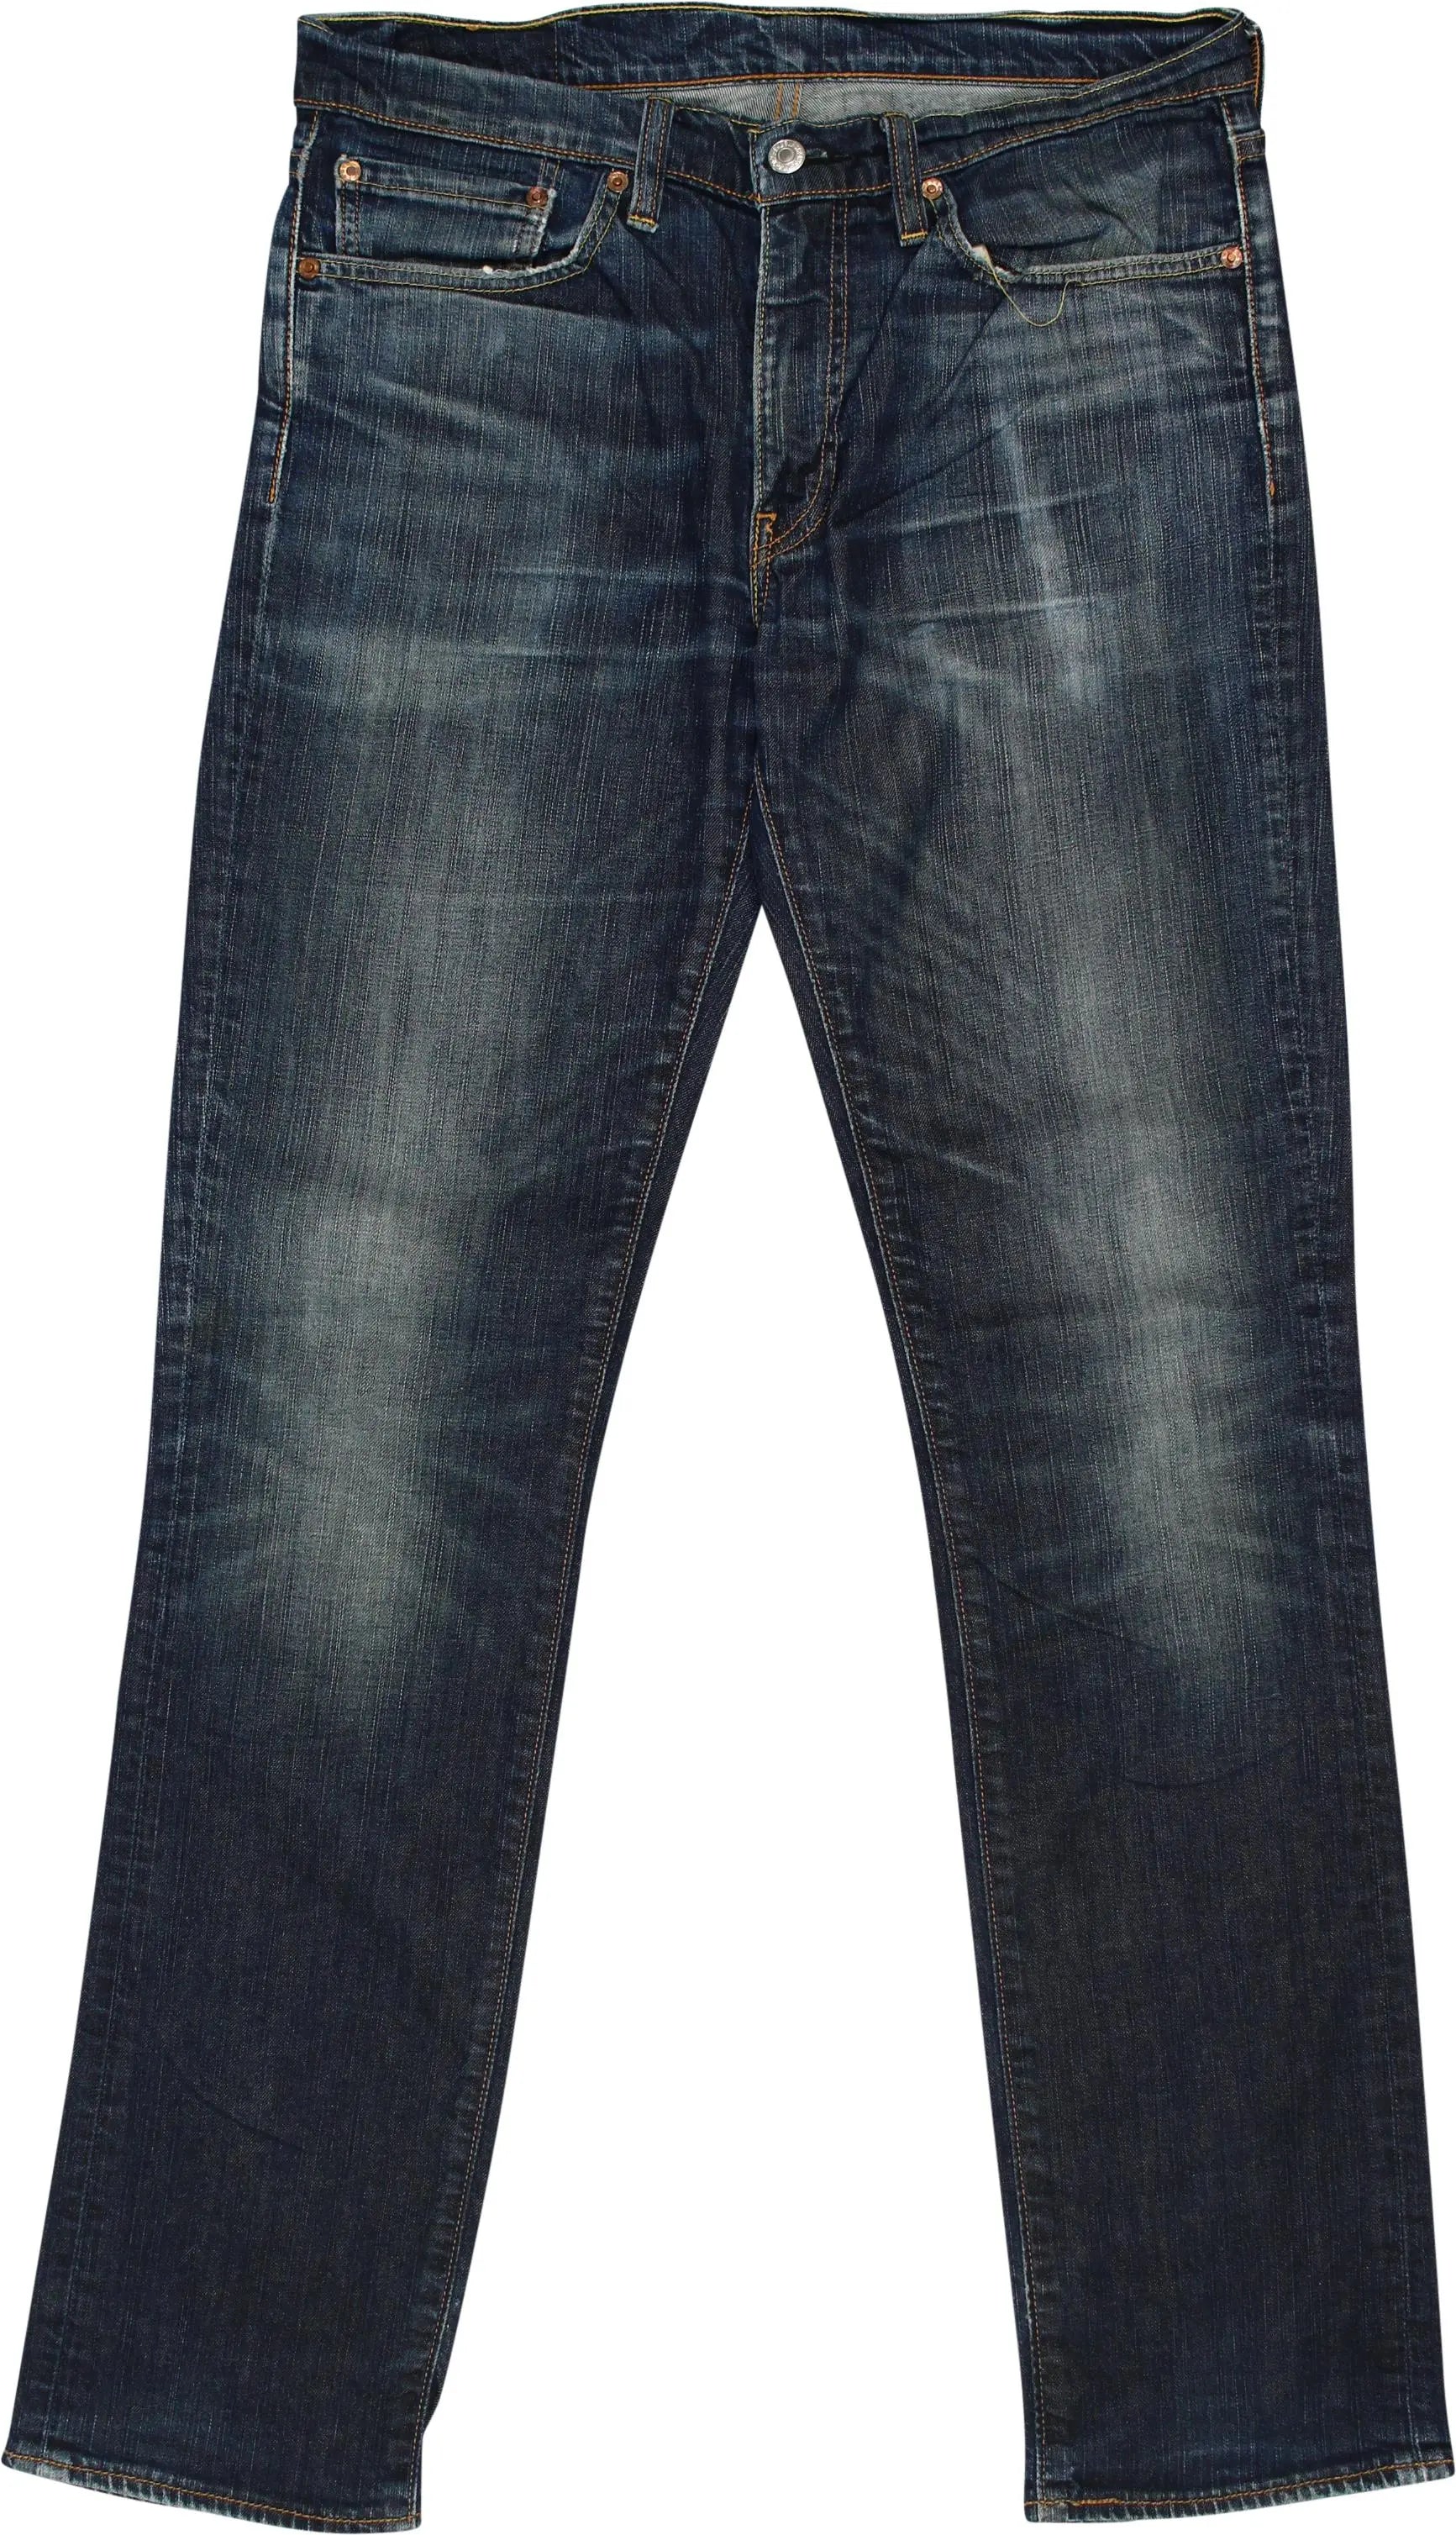 Levi's - Levi's 511 Slim Fit Jeans- ThriftTale.com - Vintage and second handclothing